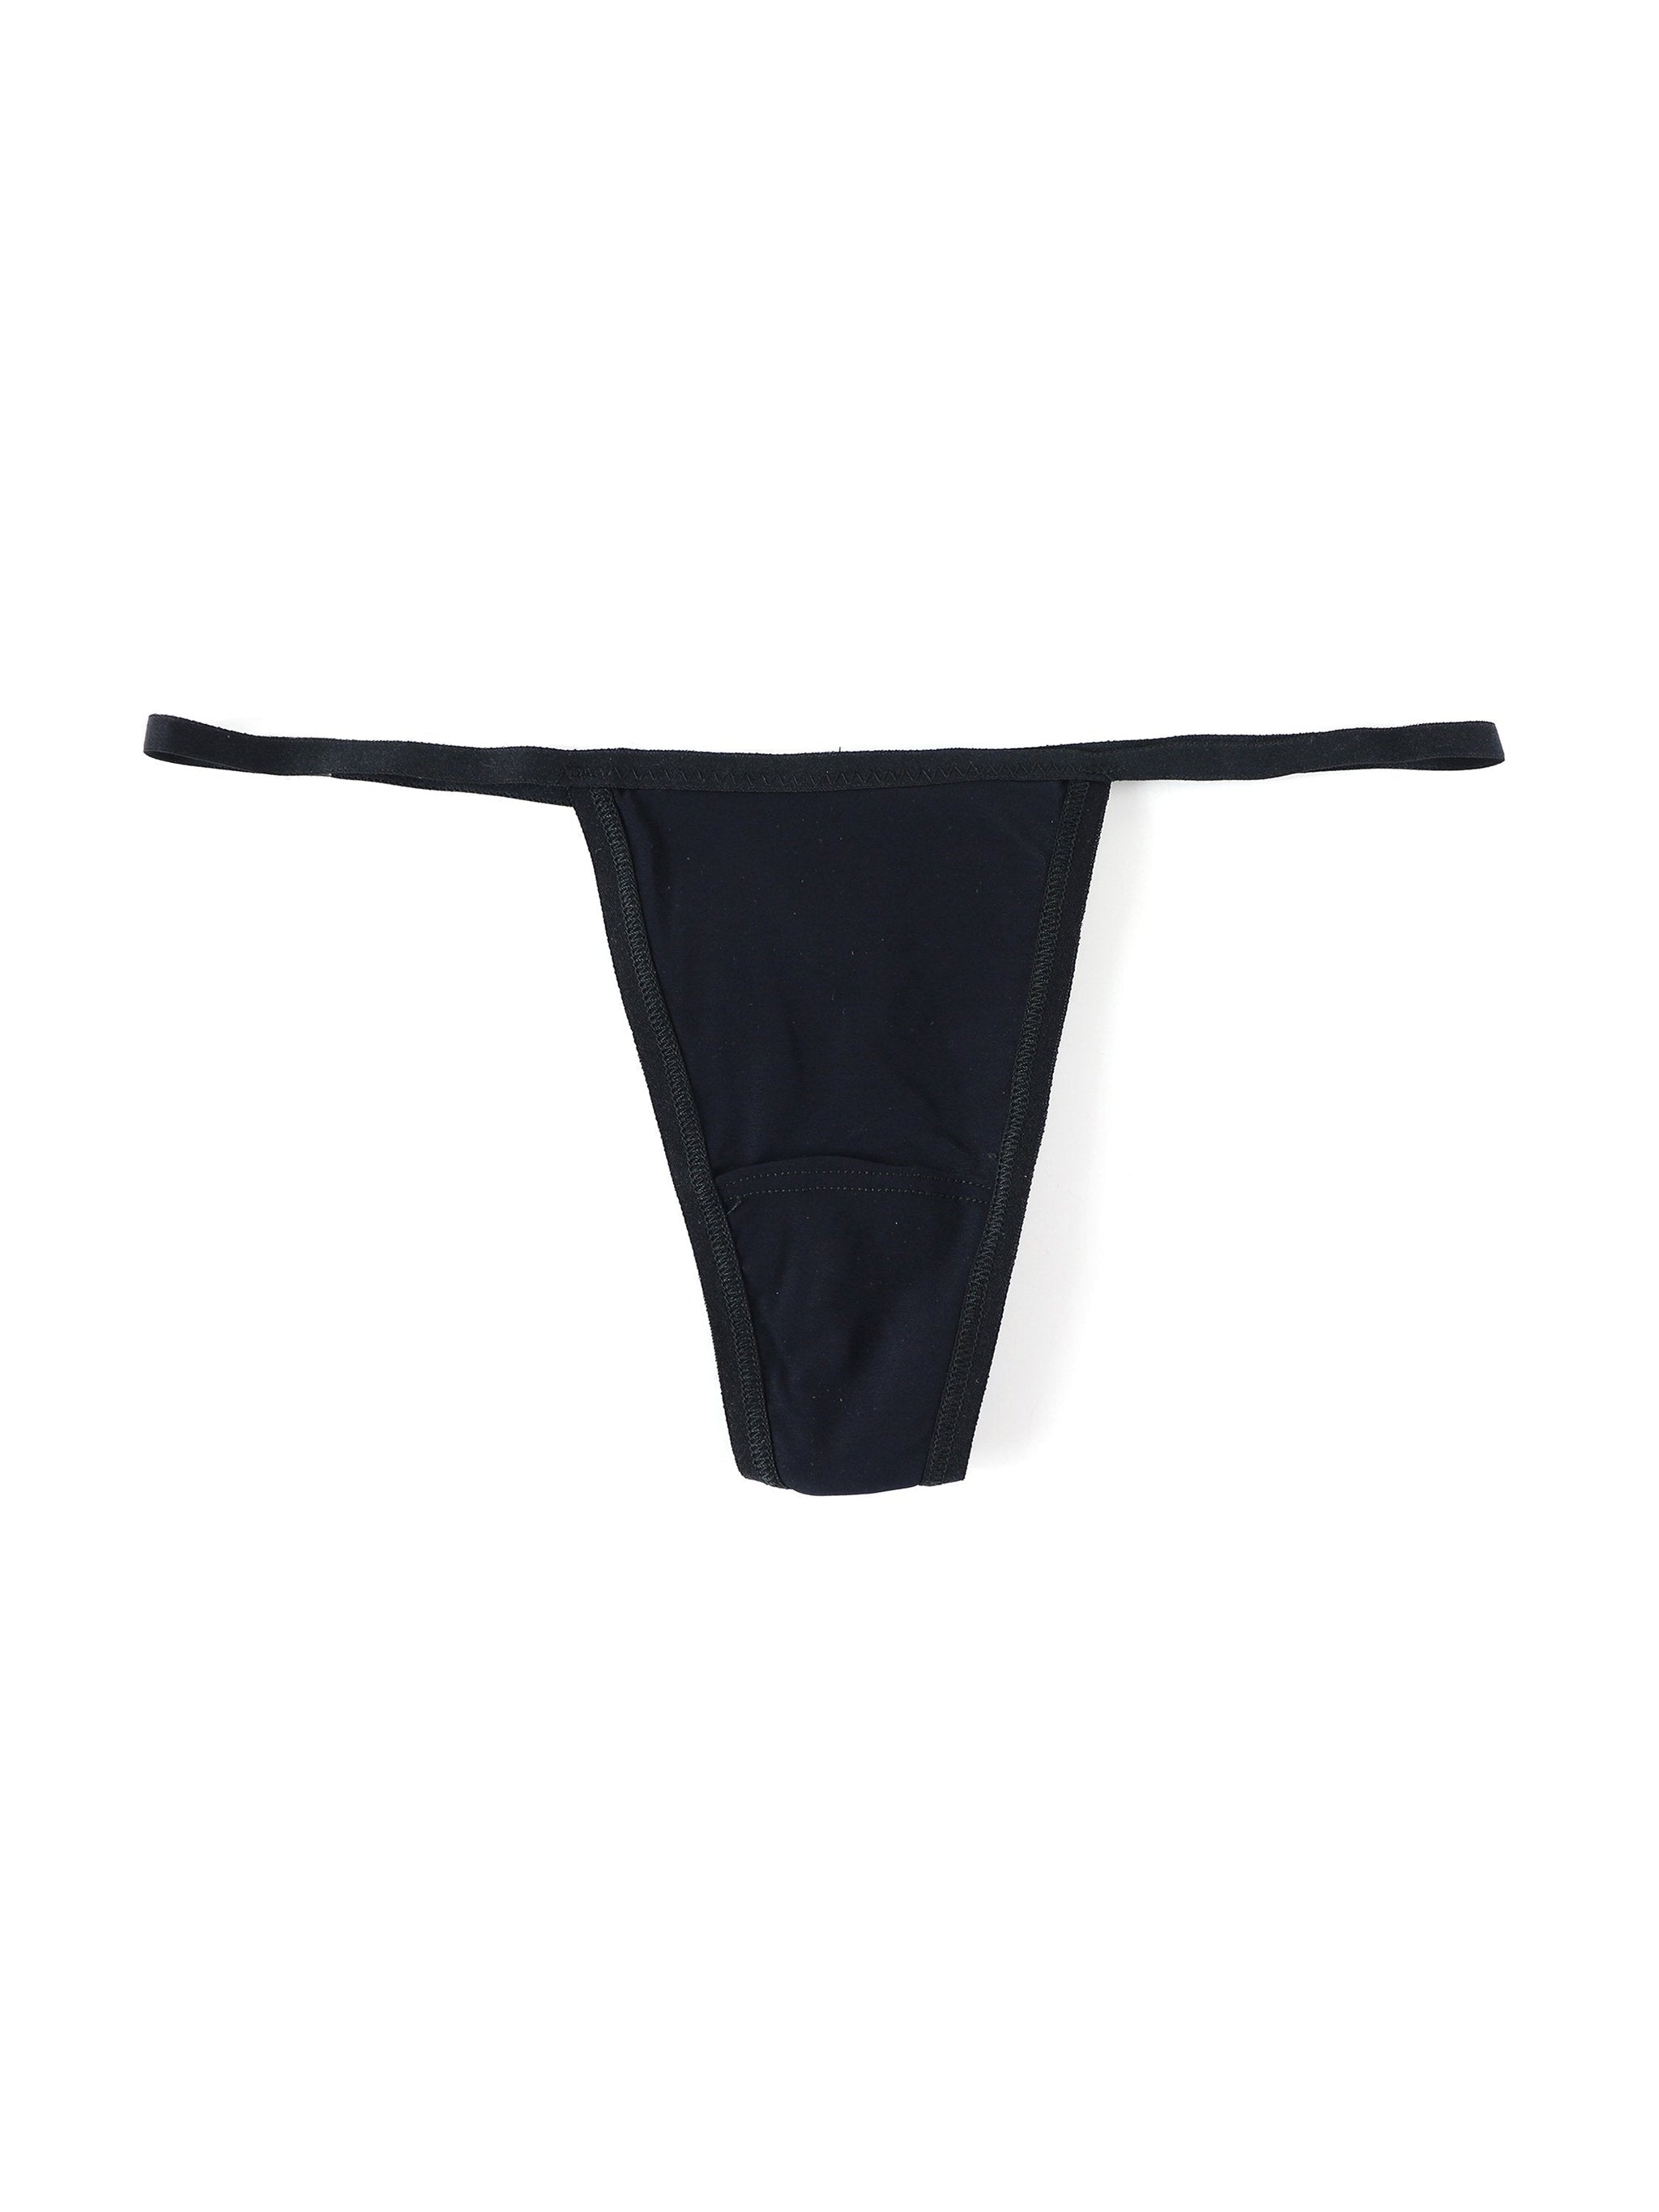 Deepelk Ladies G-String Thongs Low-Rise Panties Cotton String